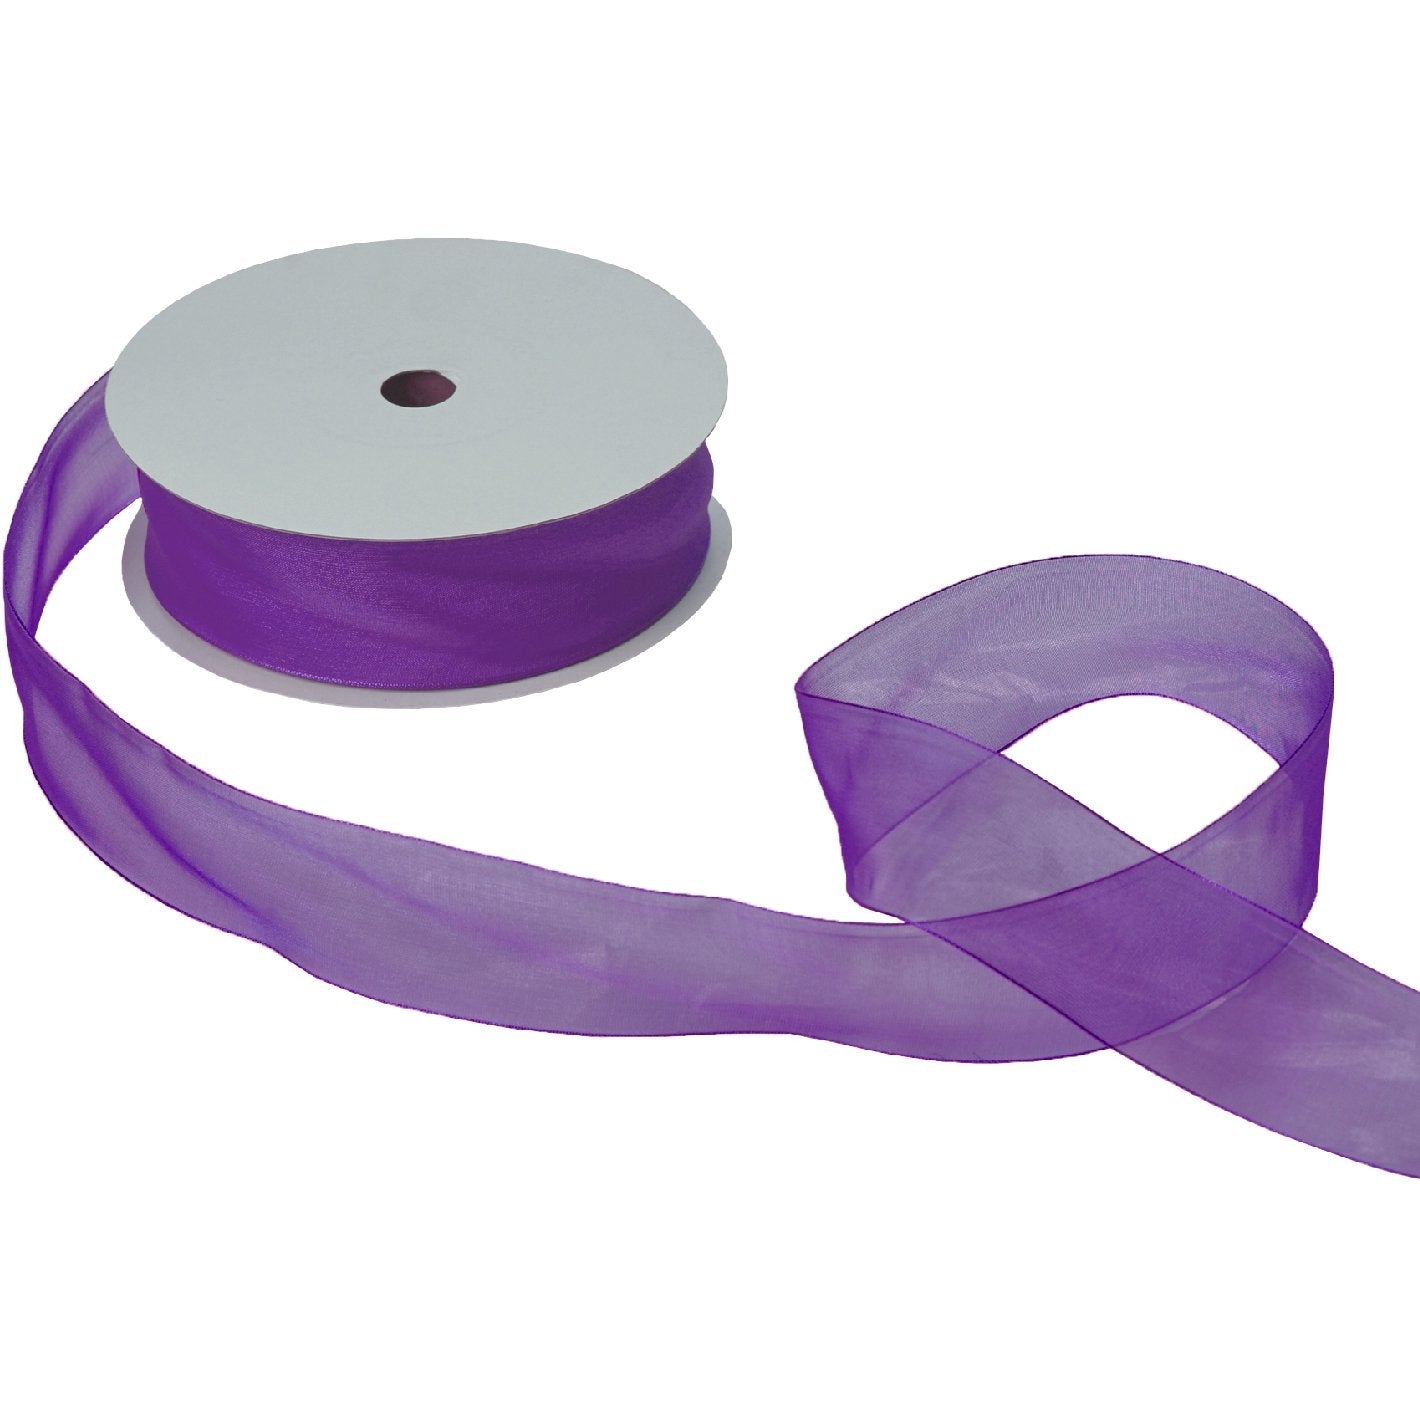 Jillson & Roberts Organdy Sheer Ribbon, 1 1/2" Wide x 100 Yards, Purple